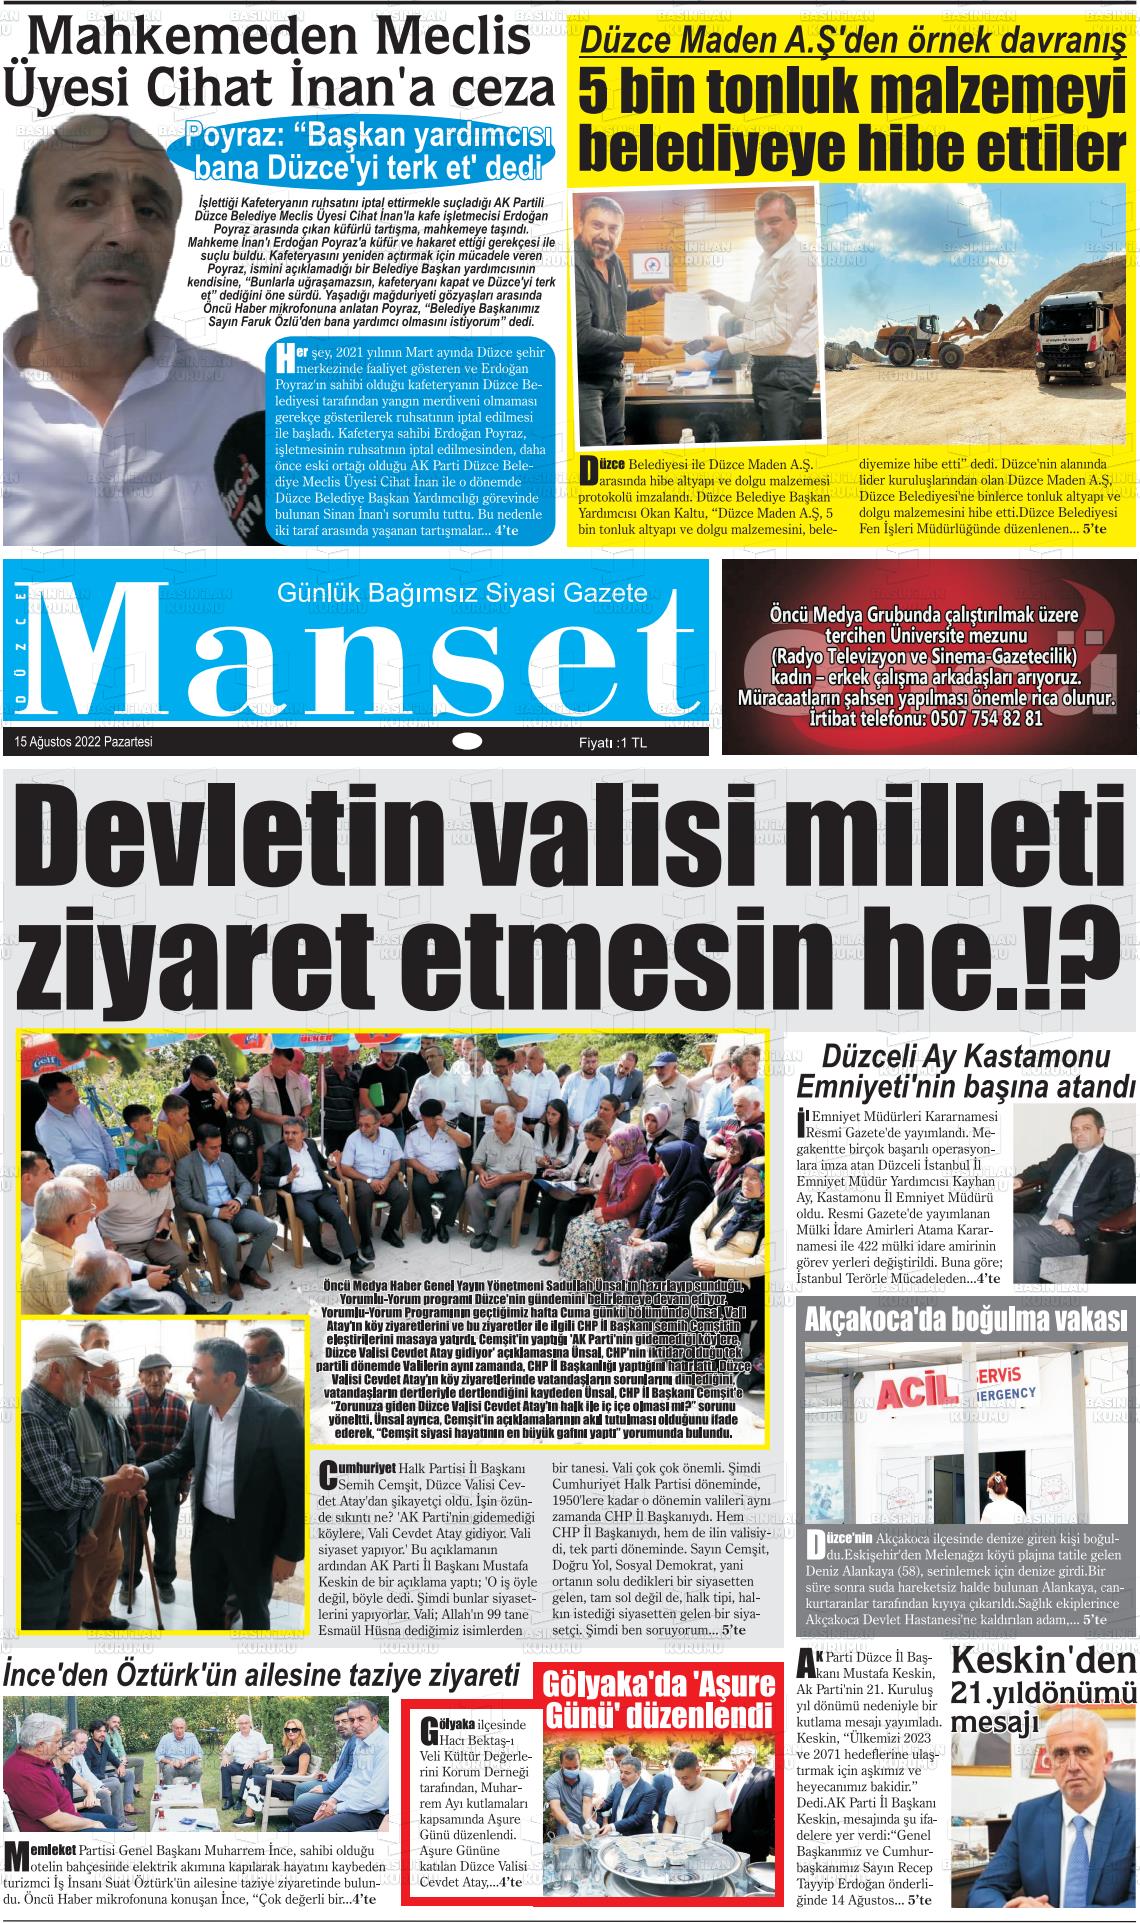 15 Ağustos 2022 Düzce Manşet Gazete Manşeti